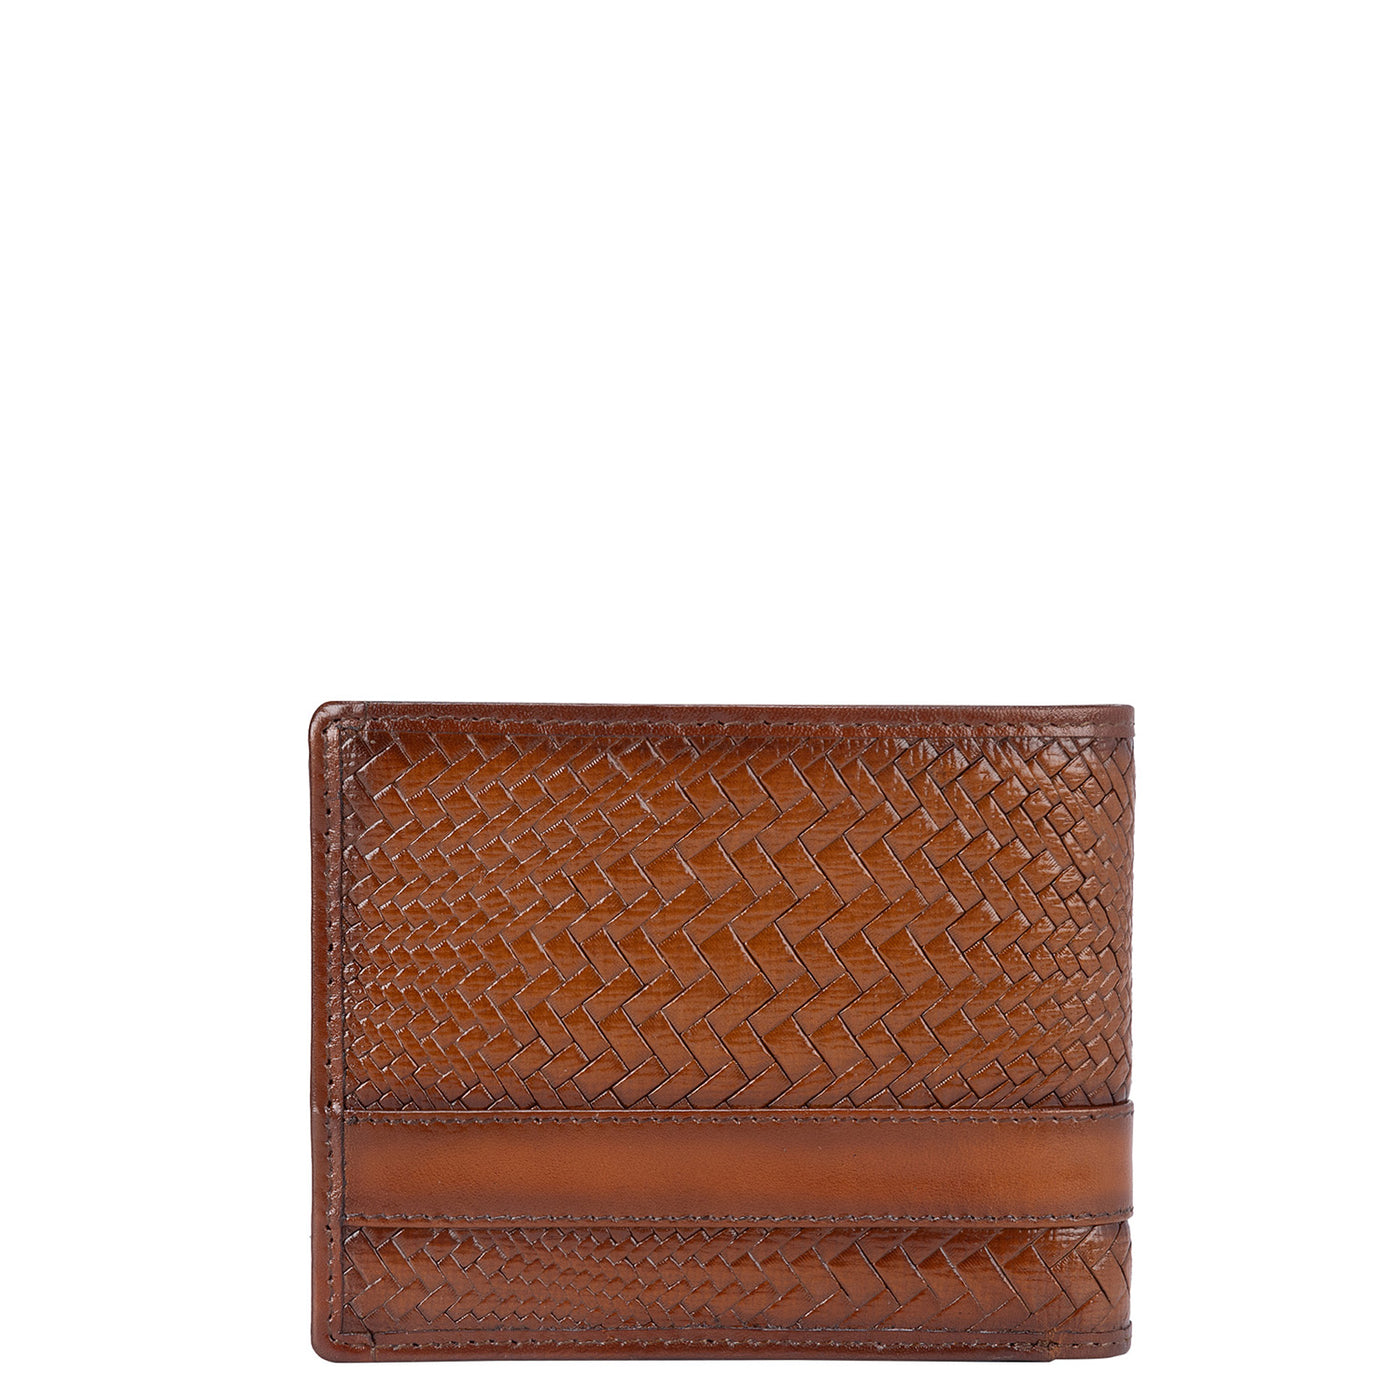 Mat Emboss Leather Mens Wallet - Cognac